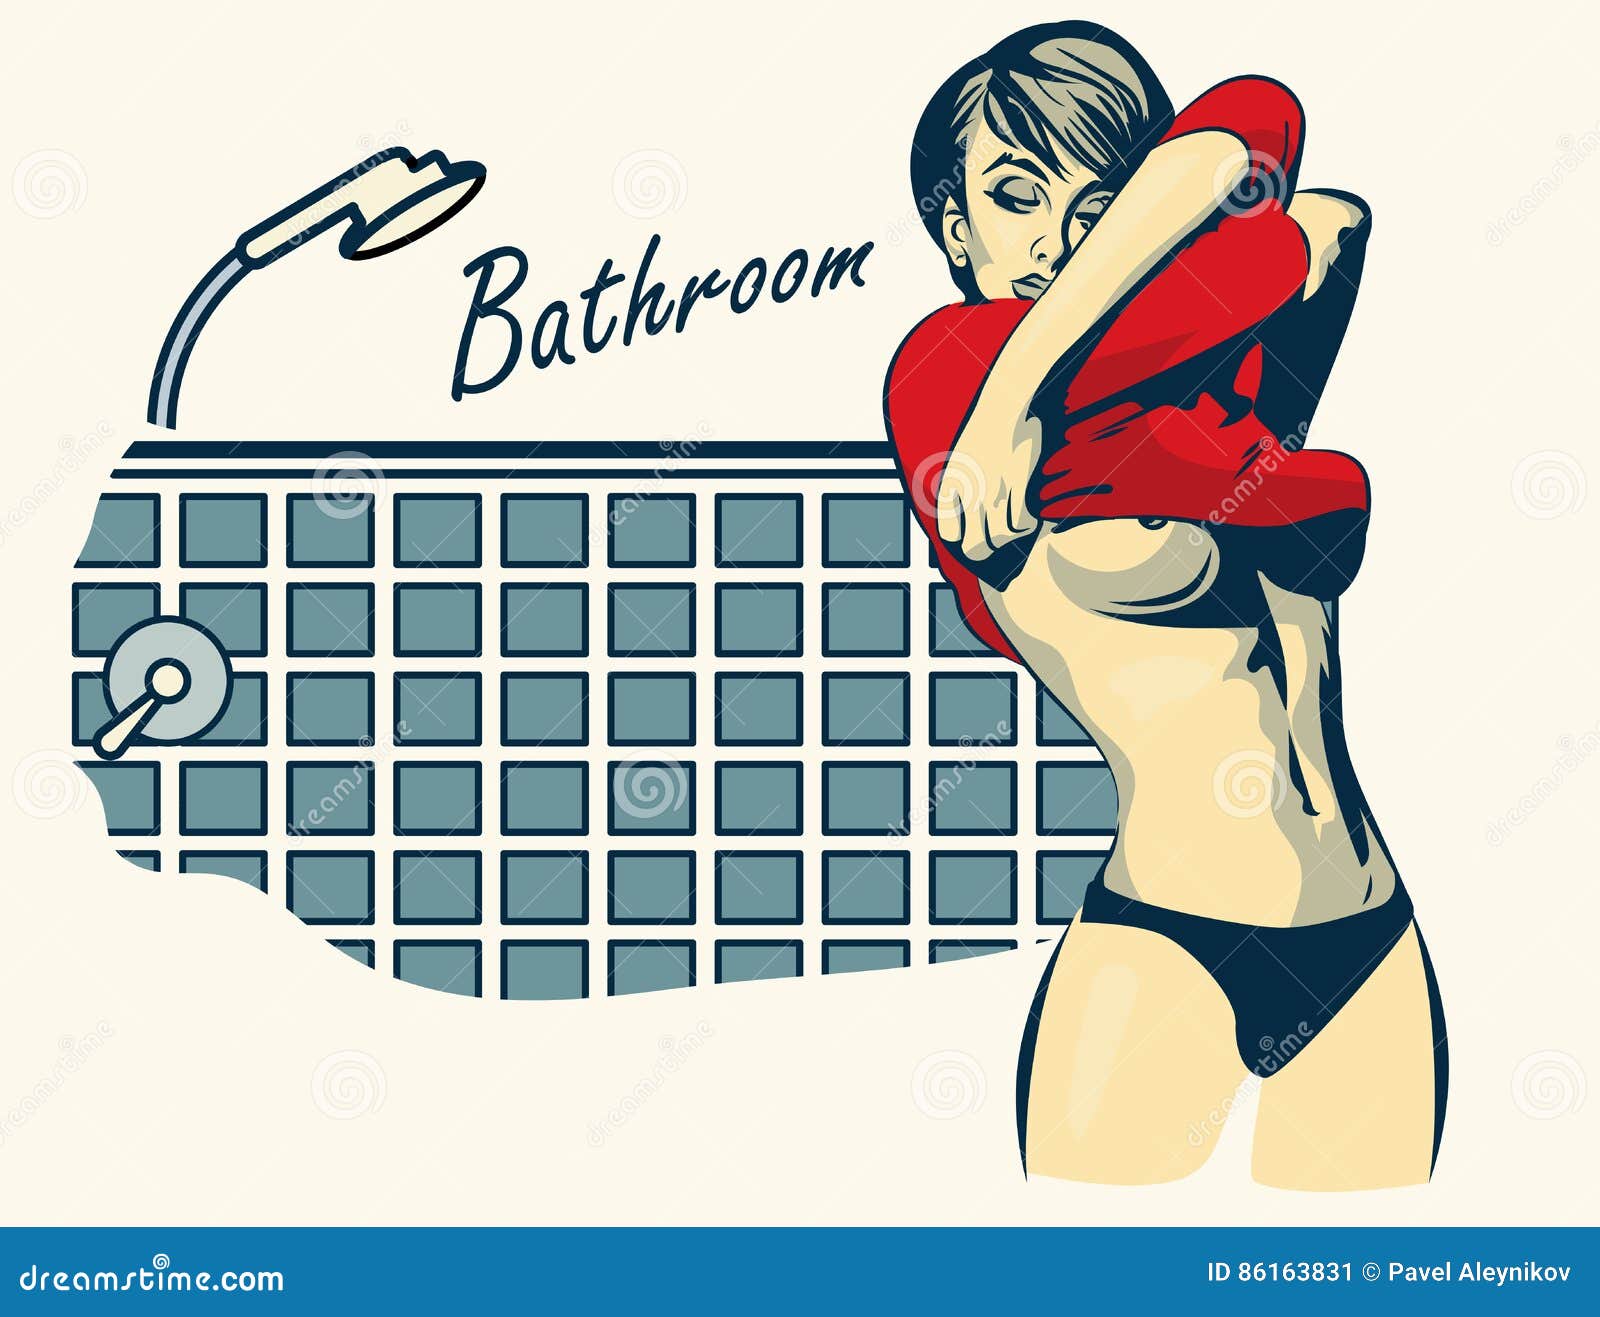 Nude Girl Bathroom Stock Illustrations pic